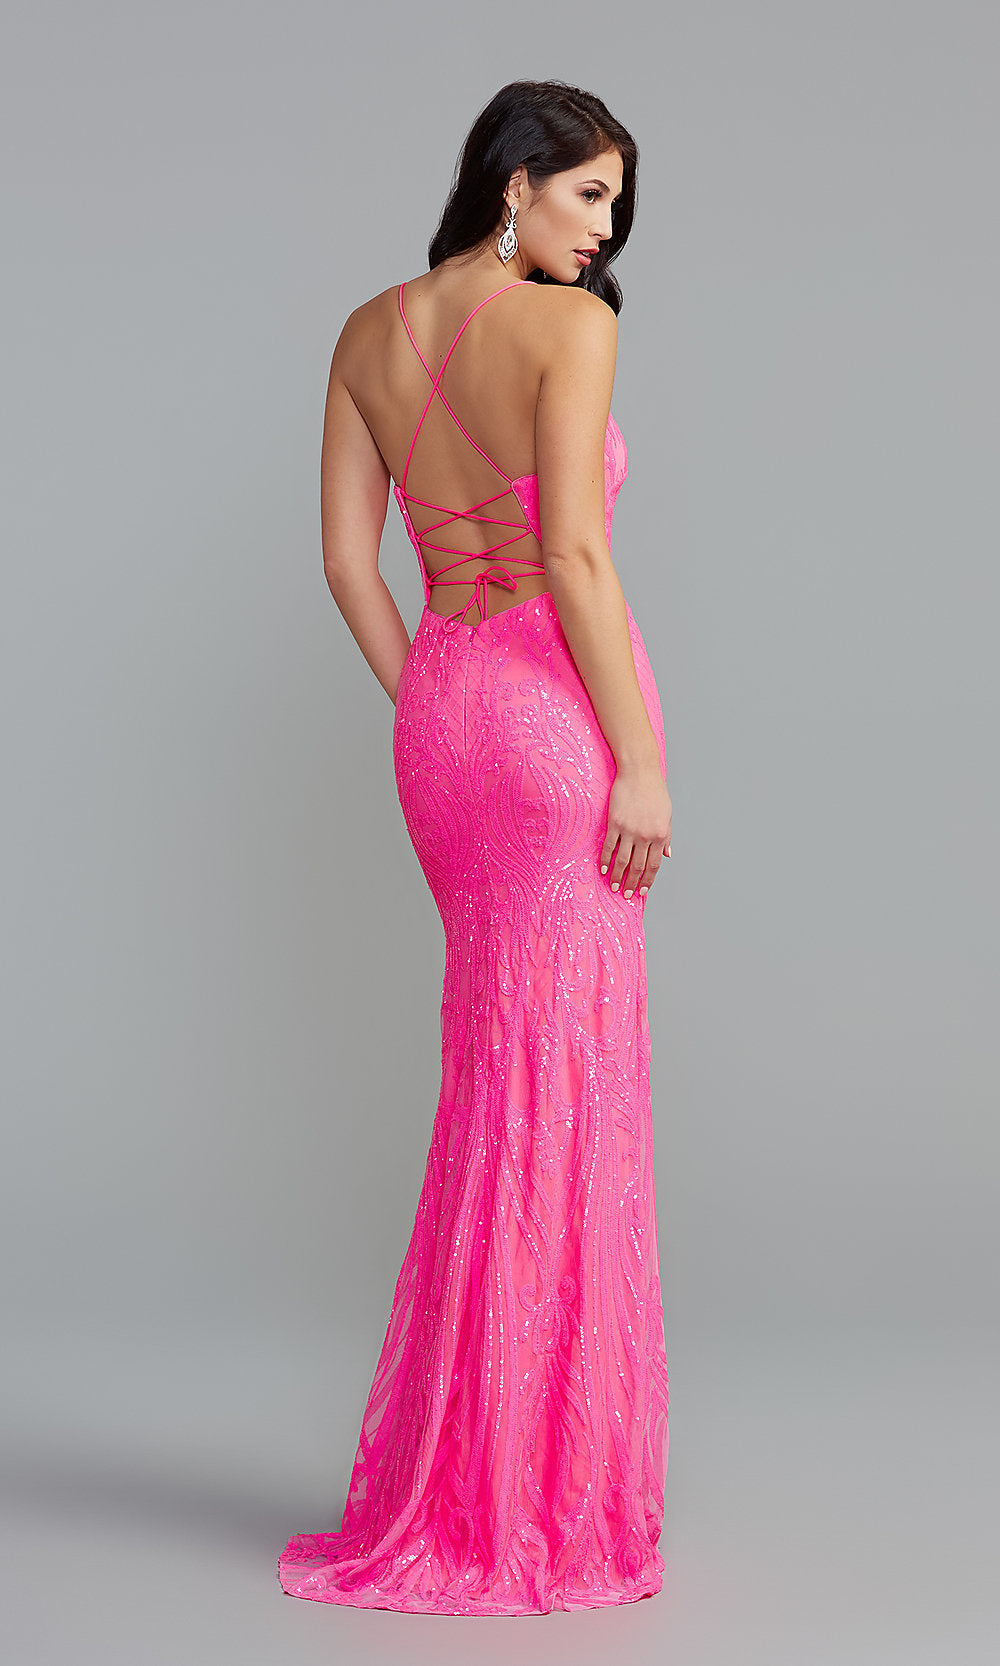 Sequin-Print Sleek Long Prom Dress - PromGirl